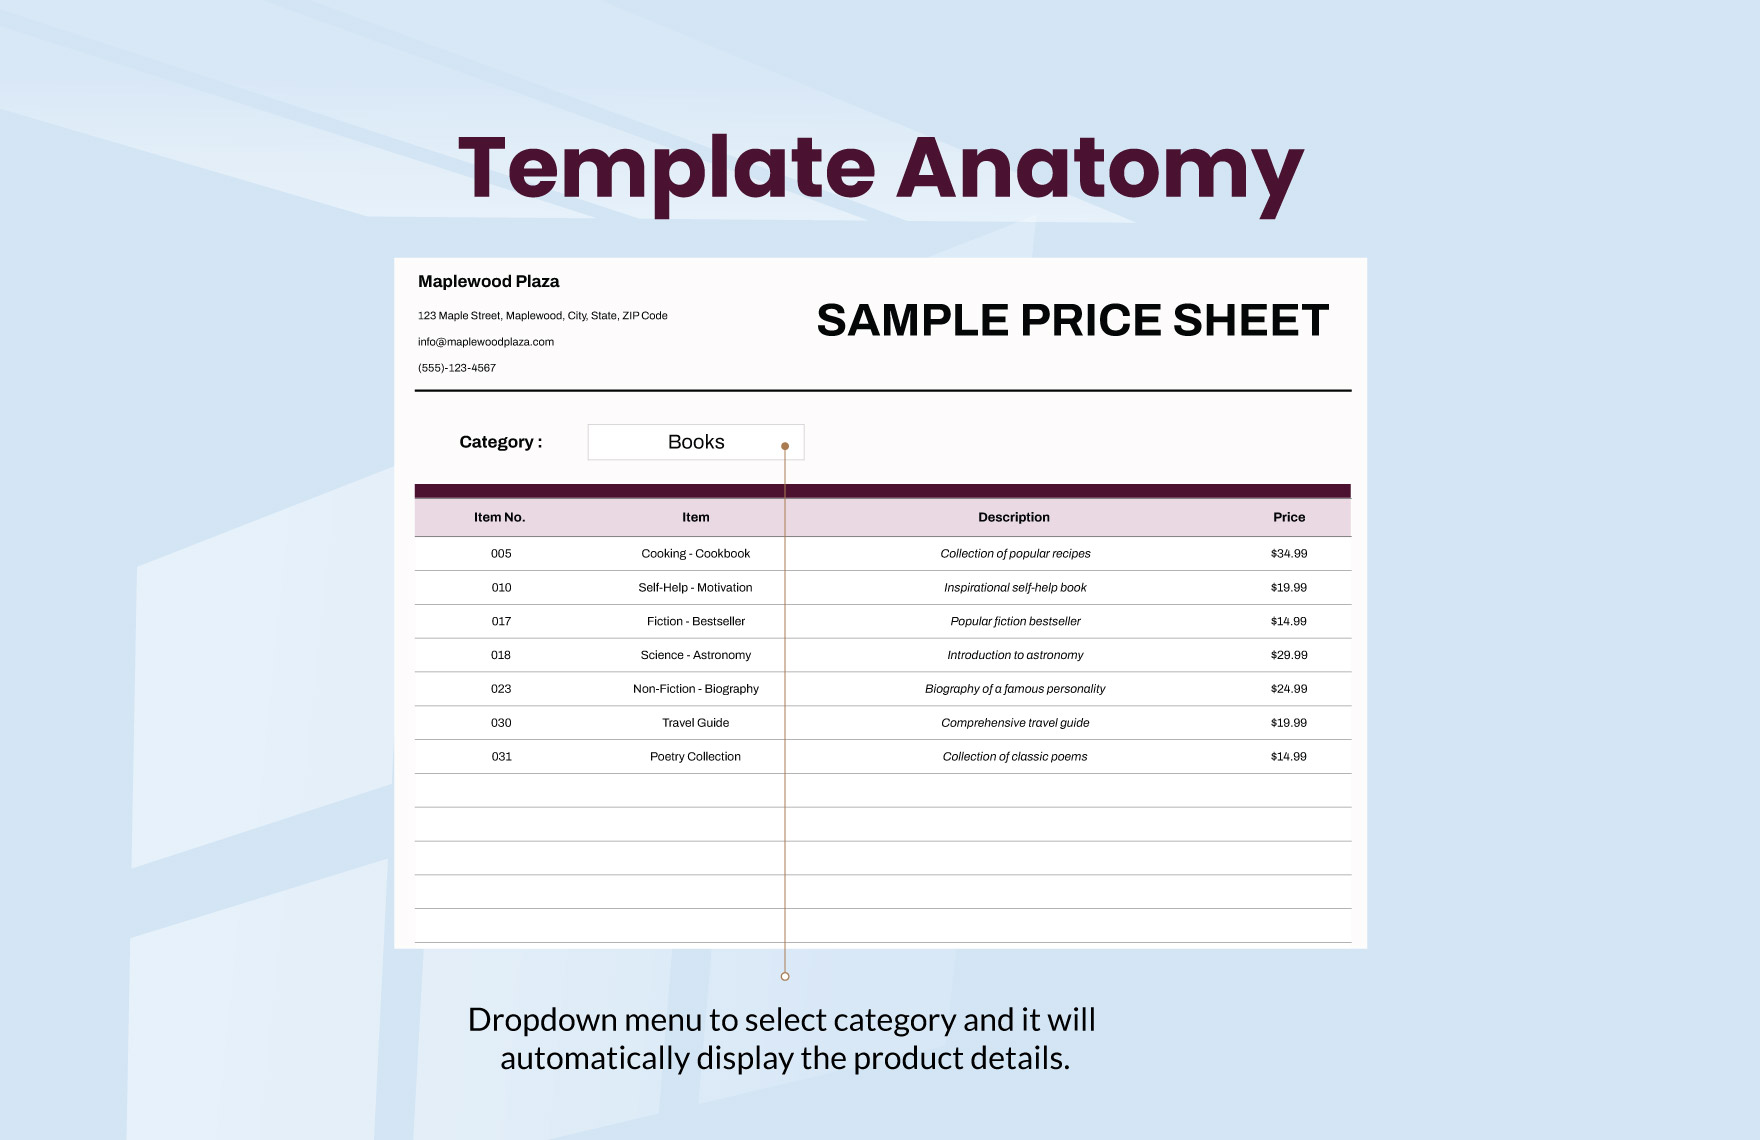 Sample Price Sheet Template